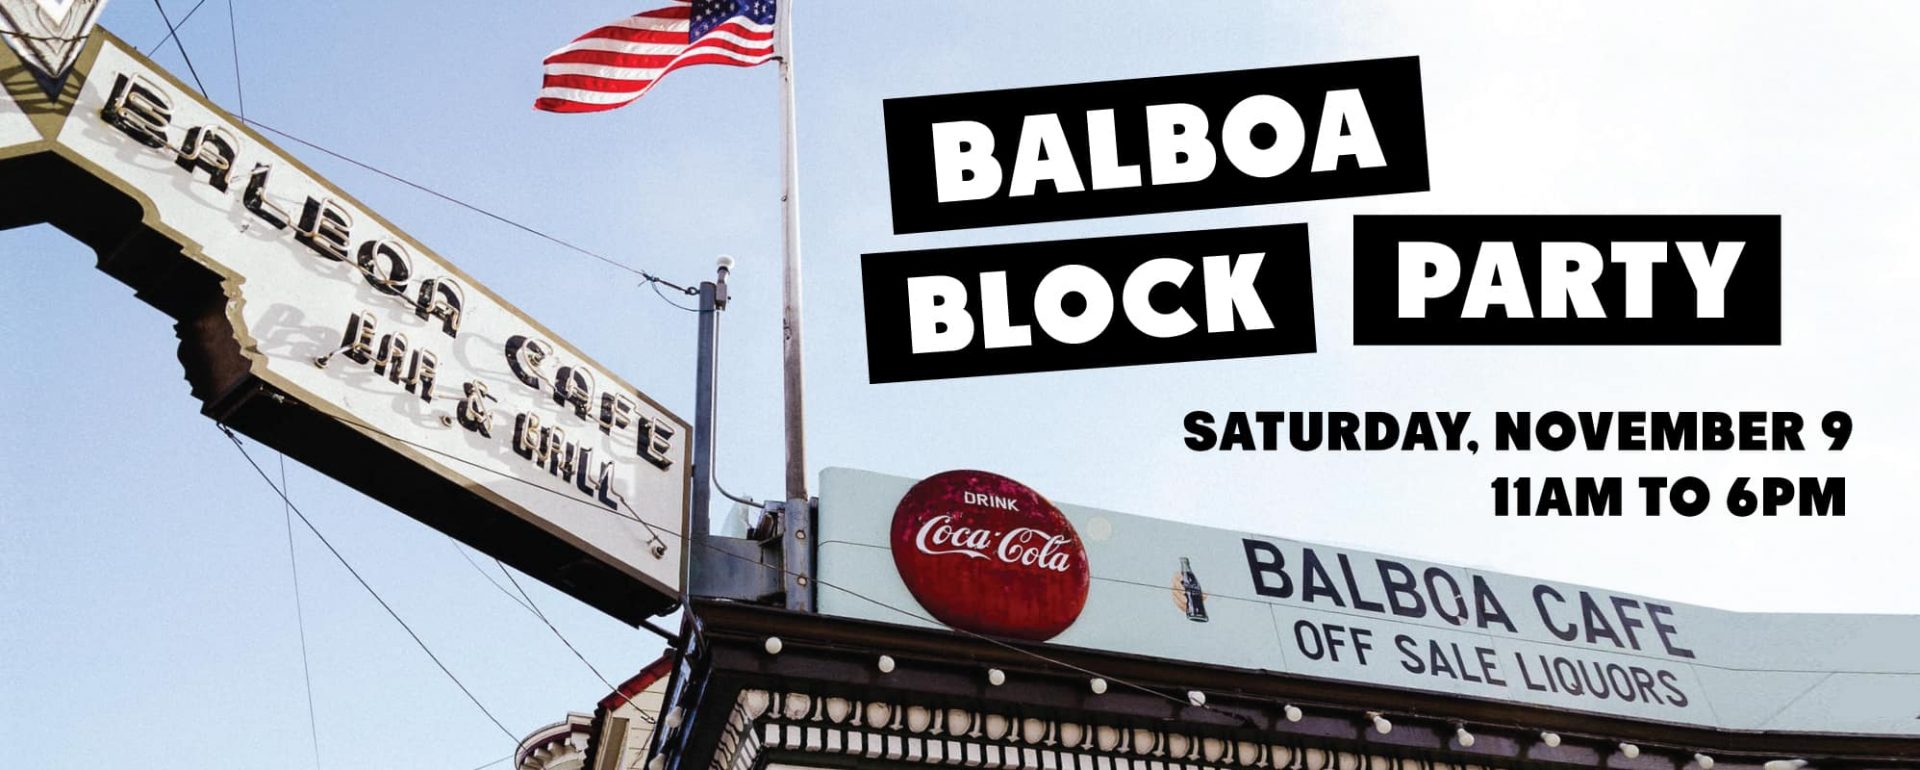 Balboa Block Party San Francisco